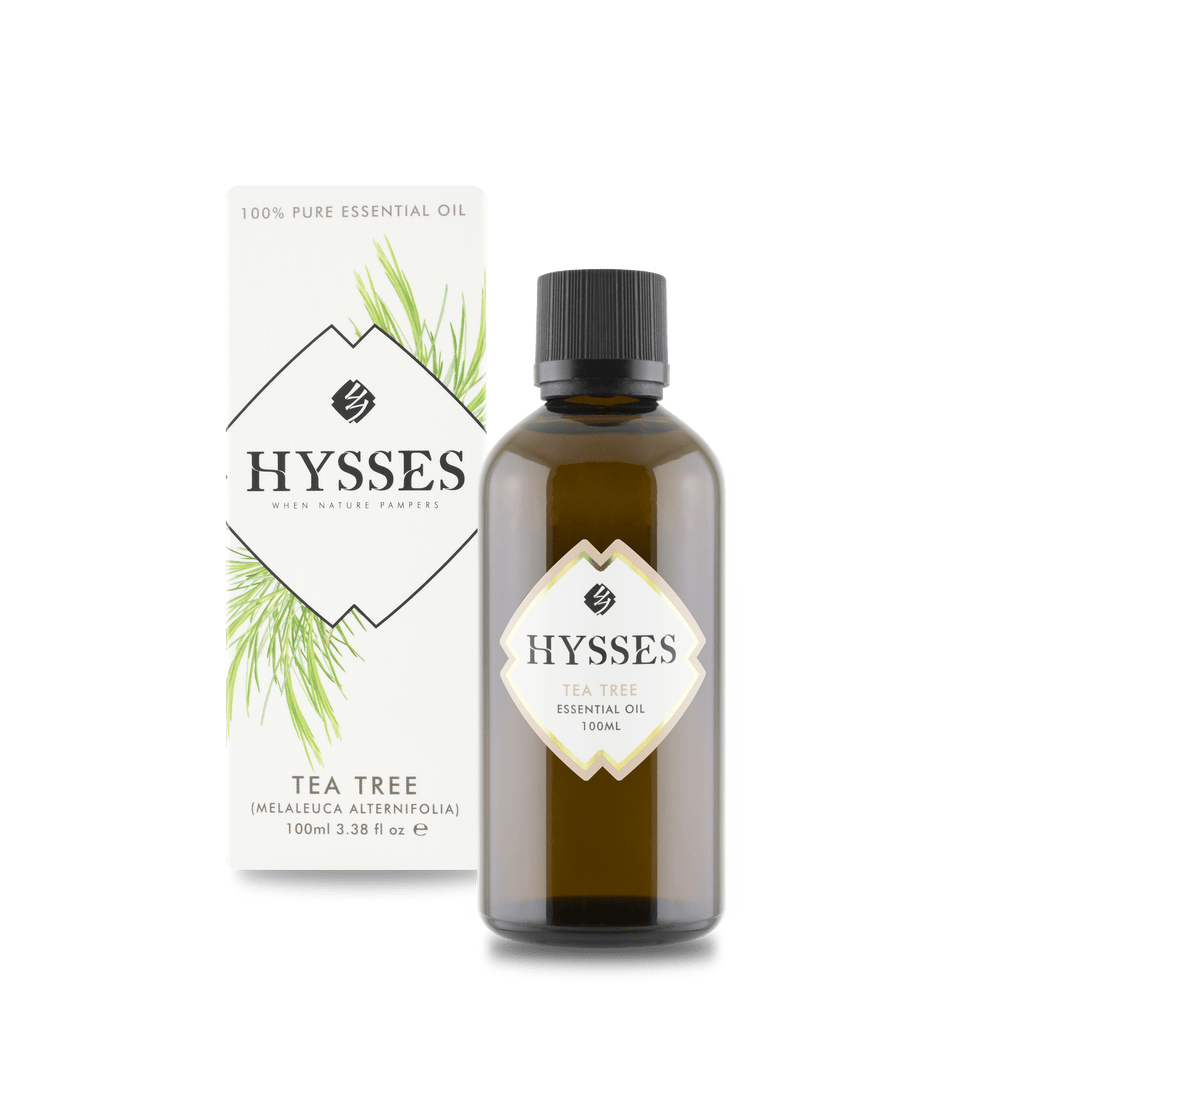 Hysses Essential Oil 100ml Essential Oil Tea Tree